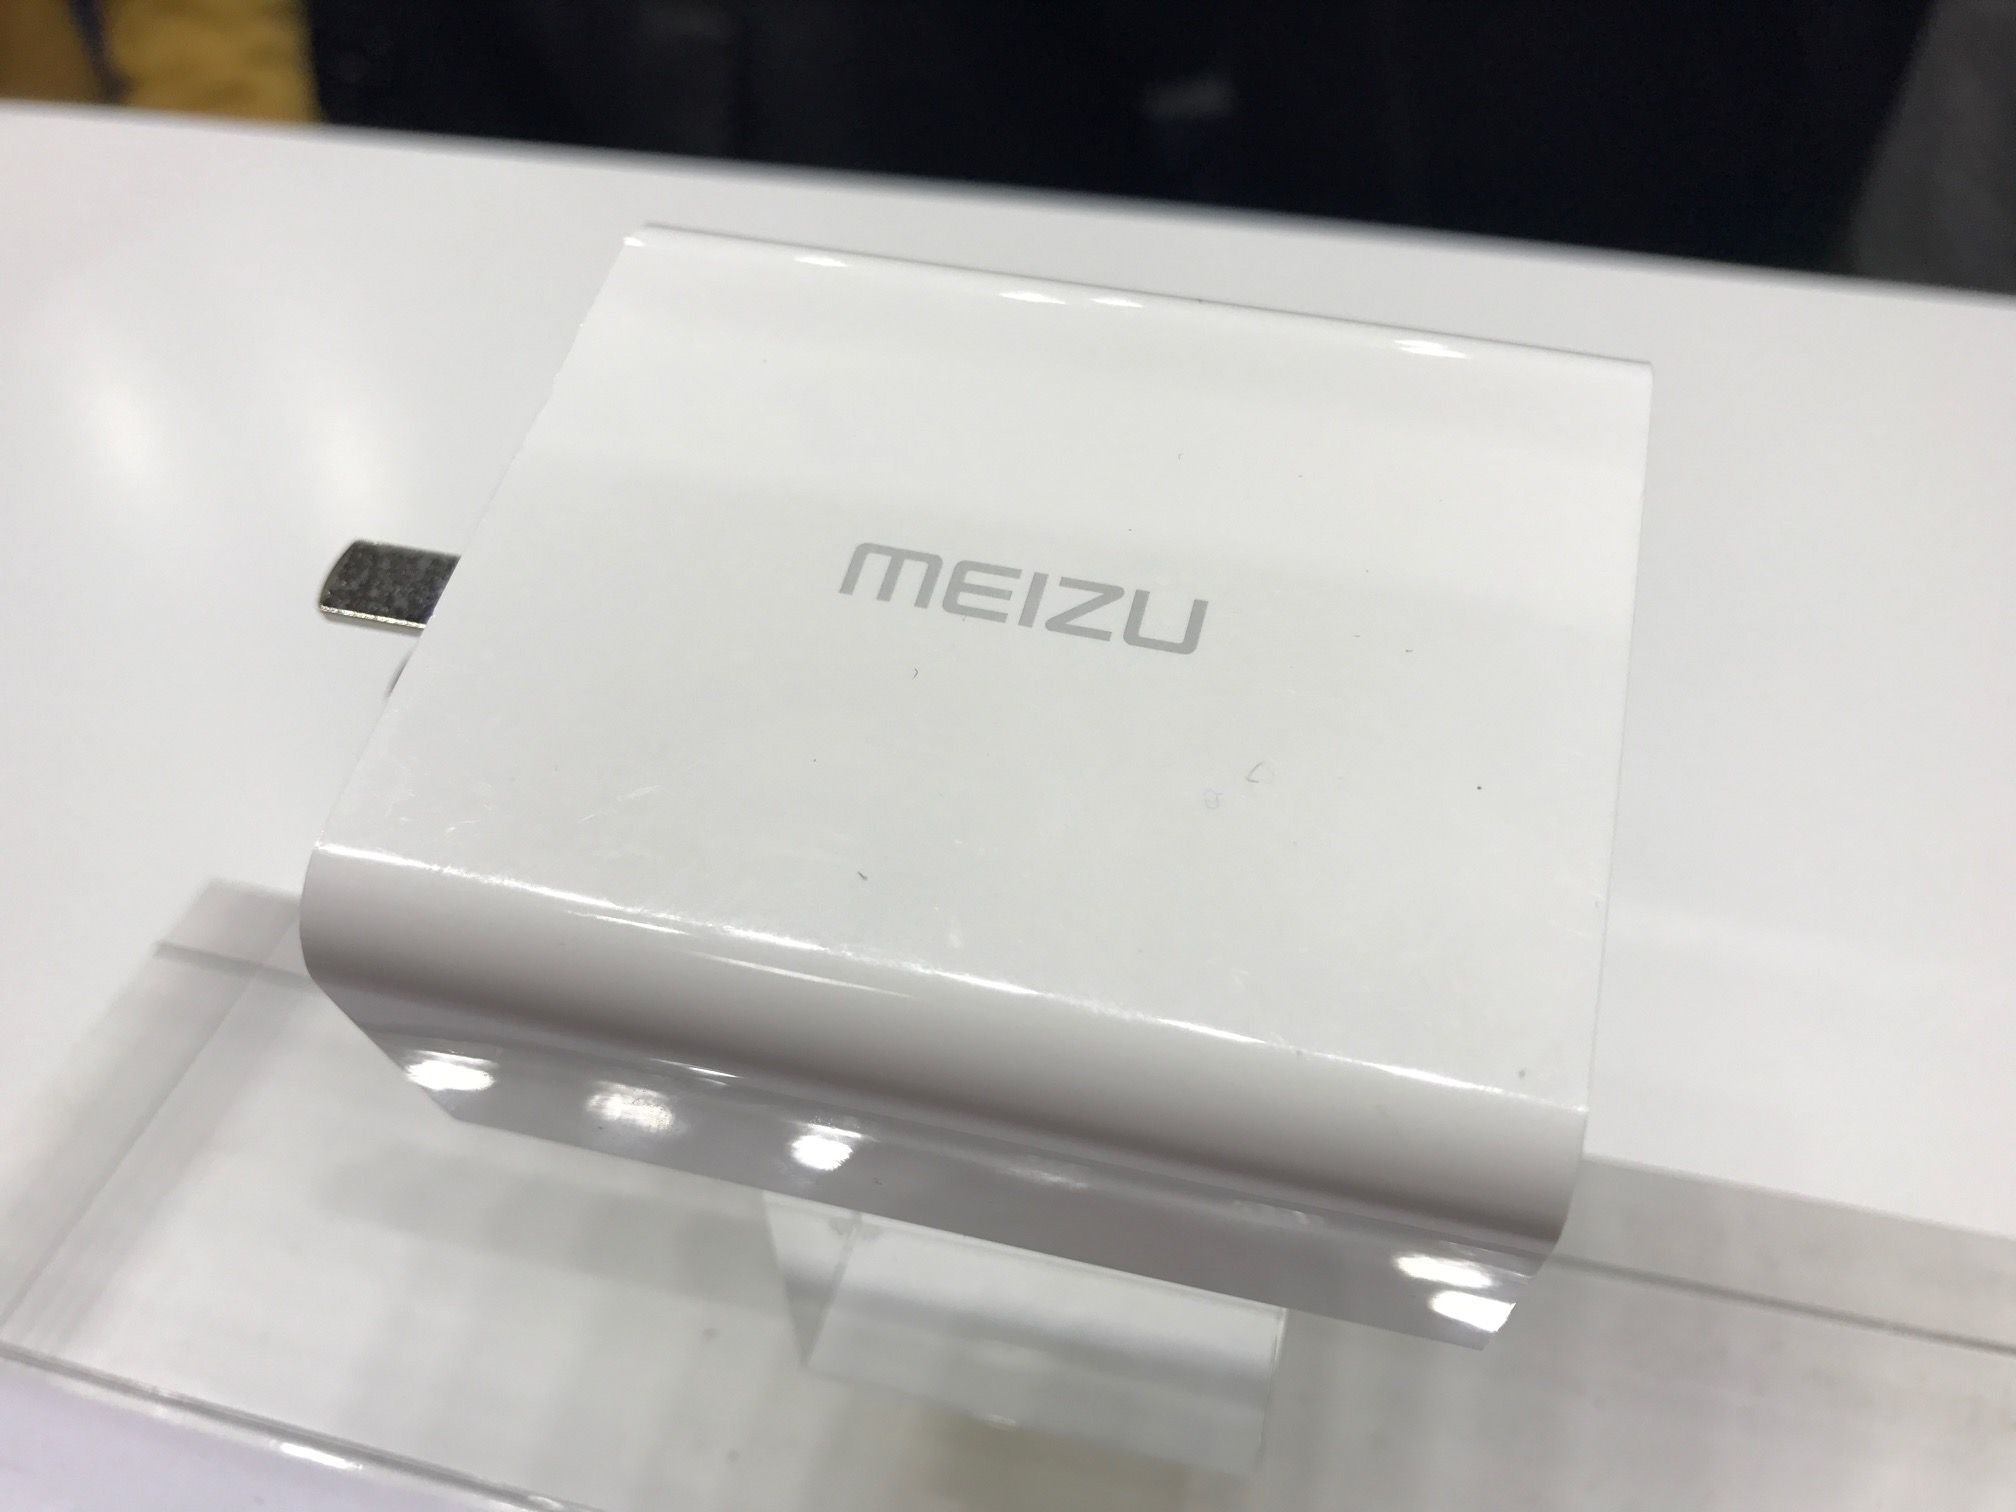 Meizu Super mCharge